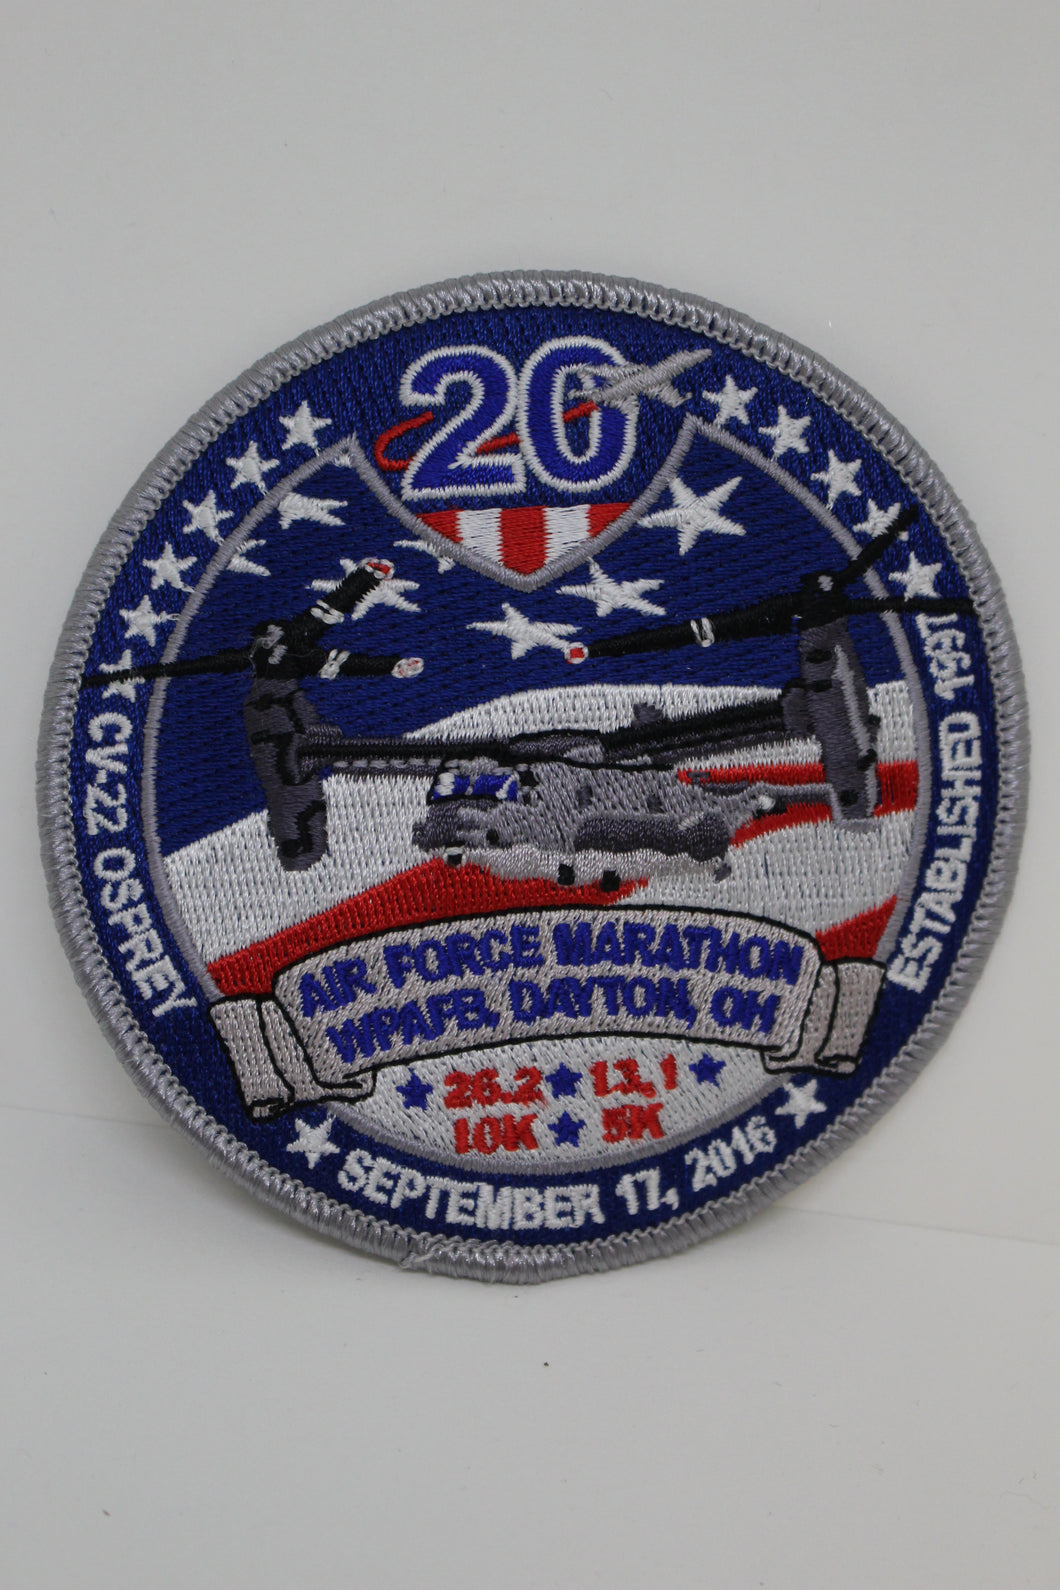 Air Force WPAFB 20th Annual Marathon Patch, Sept 17, 2016